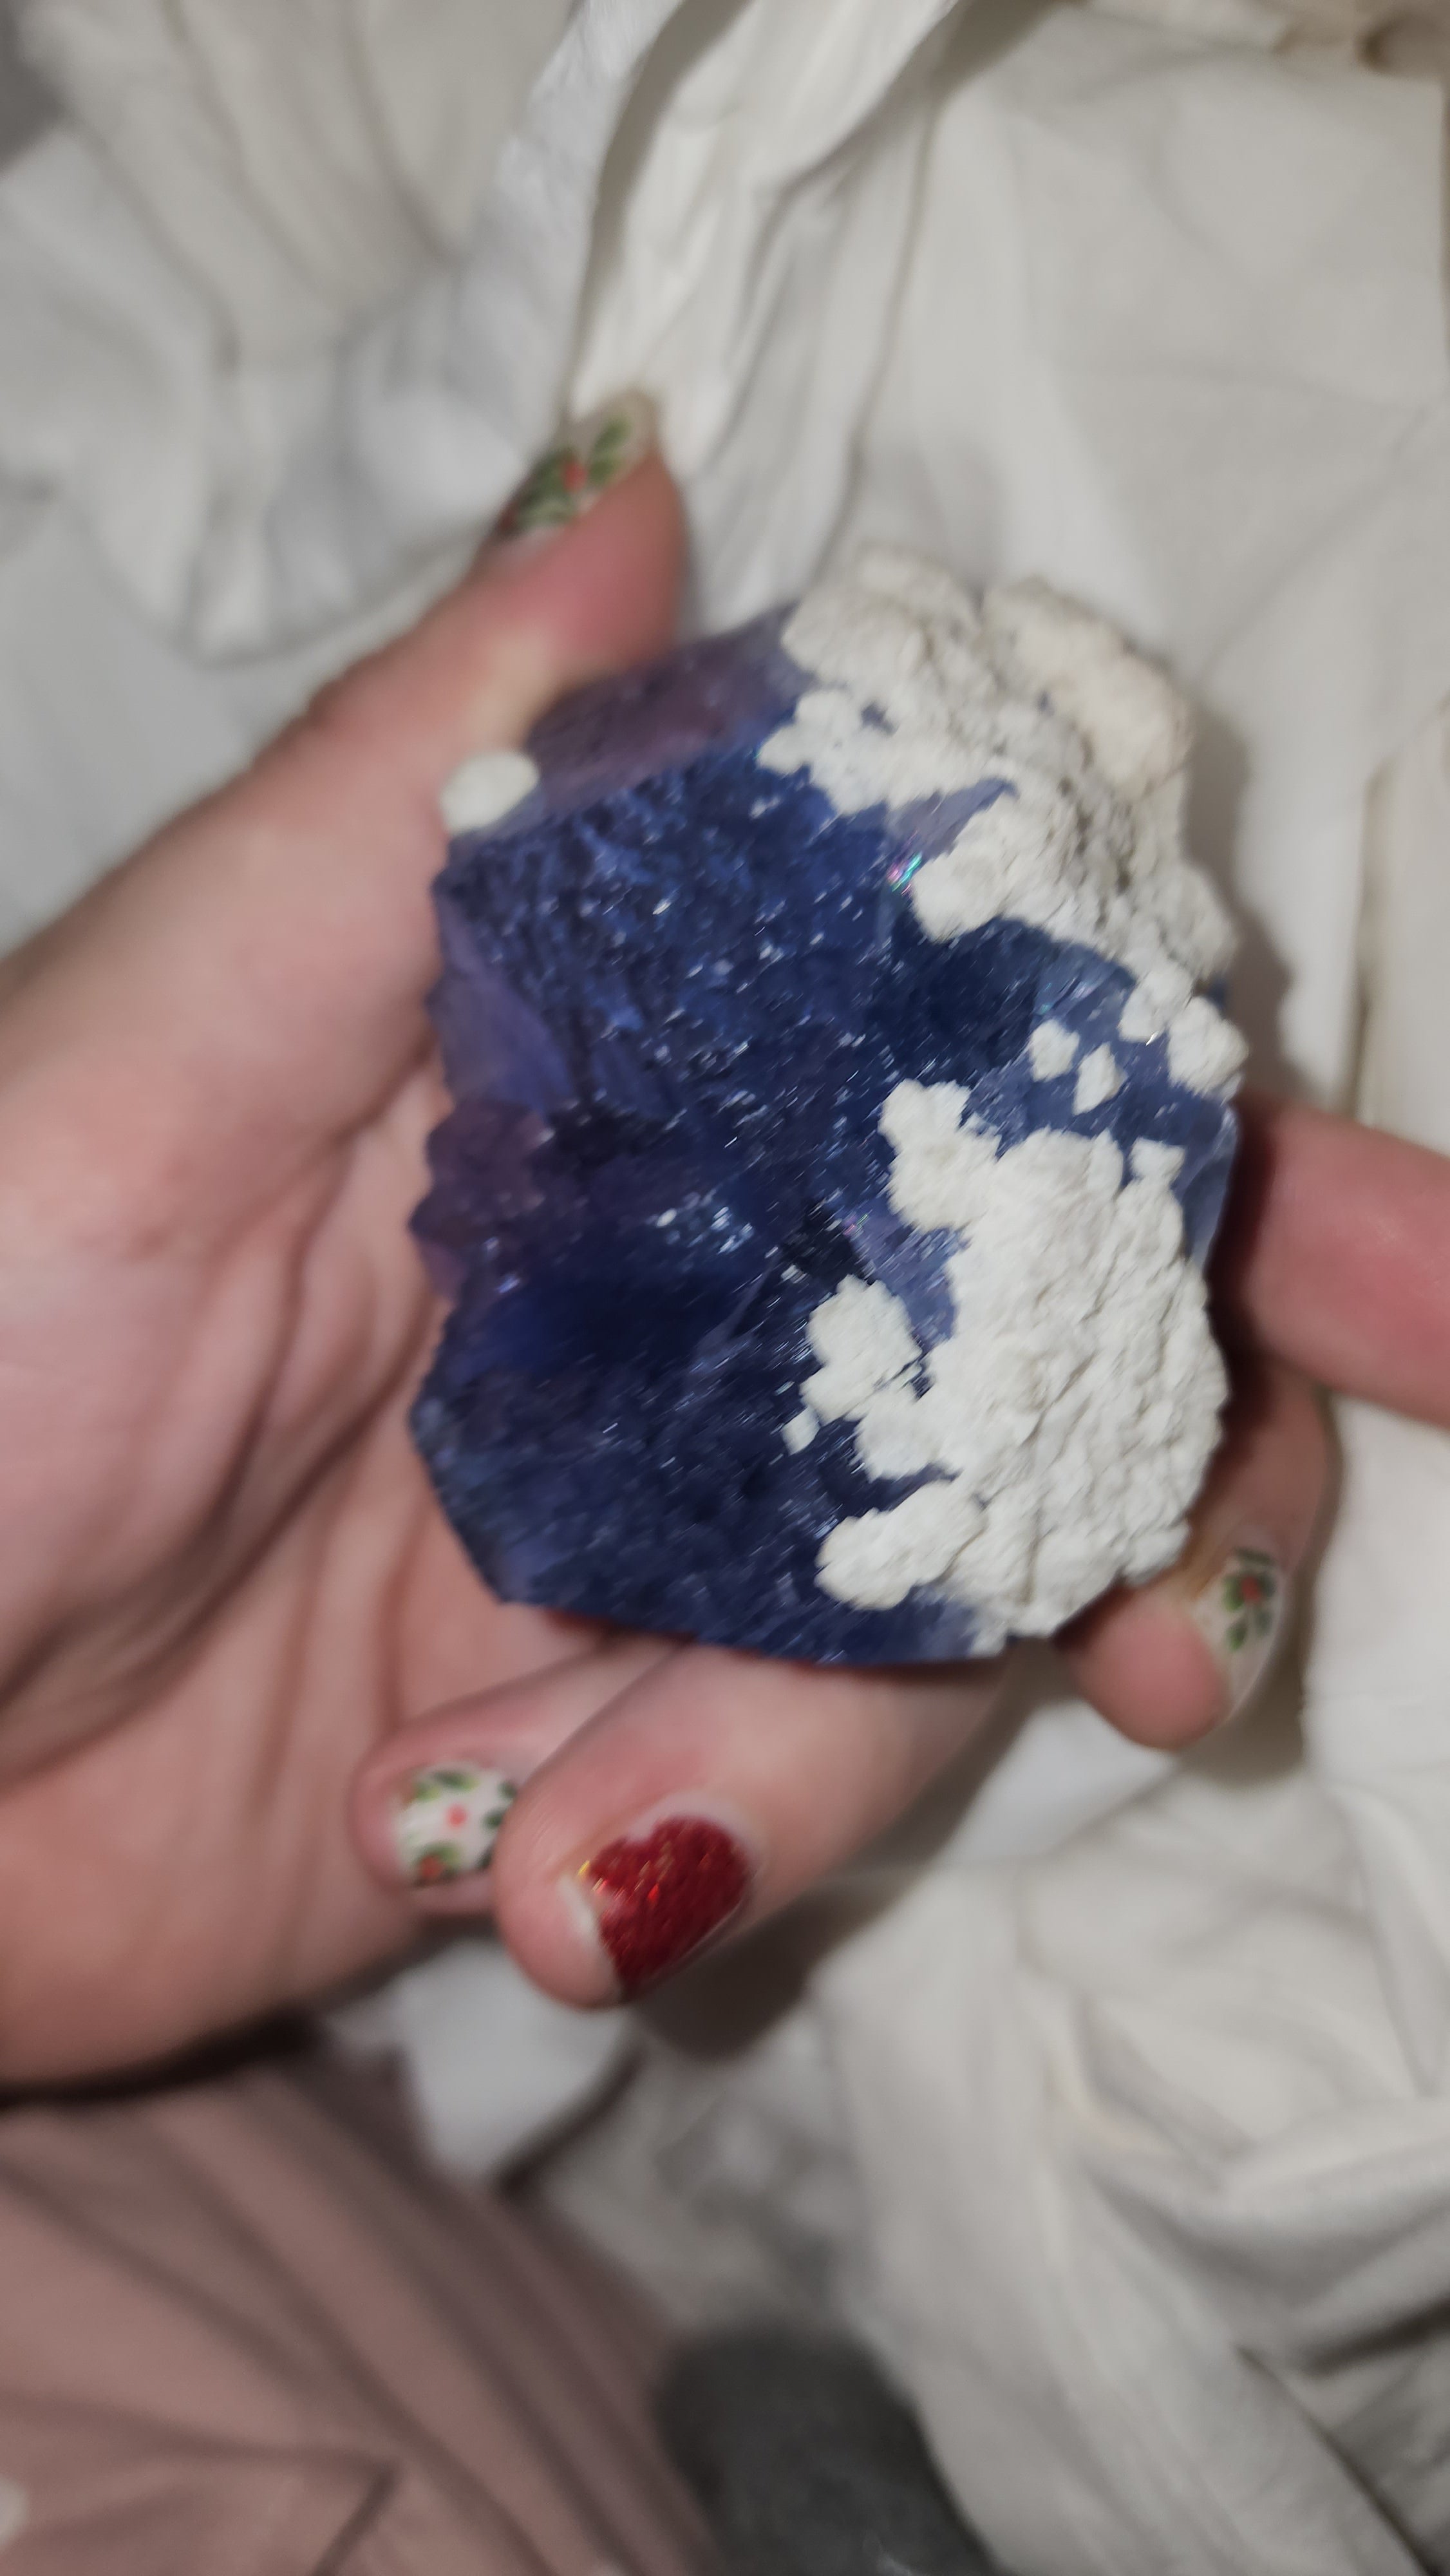 Blue fluorite with uv calcite, from Quanzhou, Fujian, China